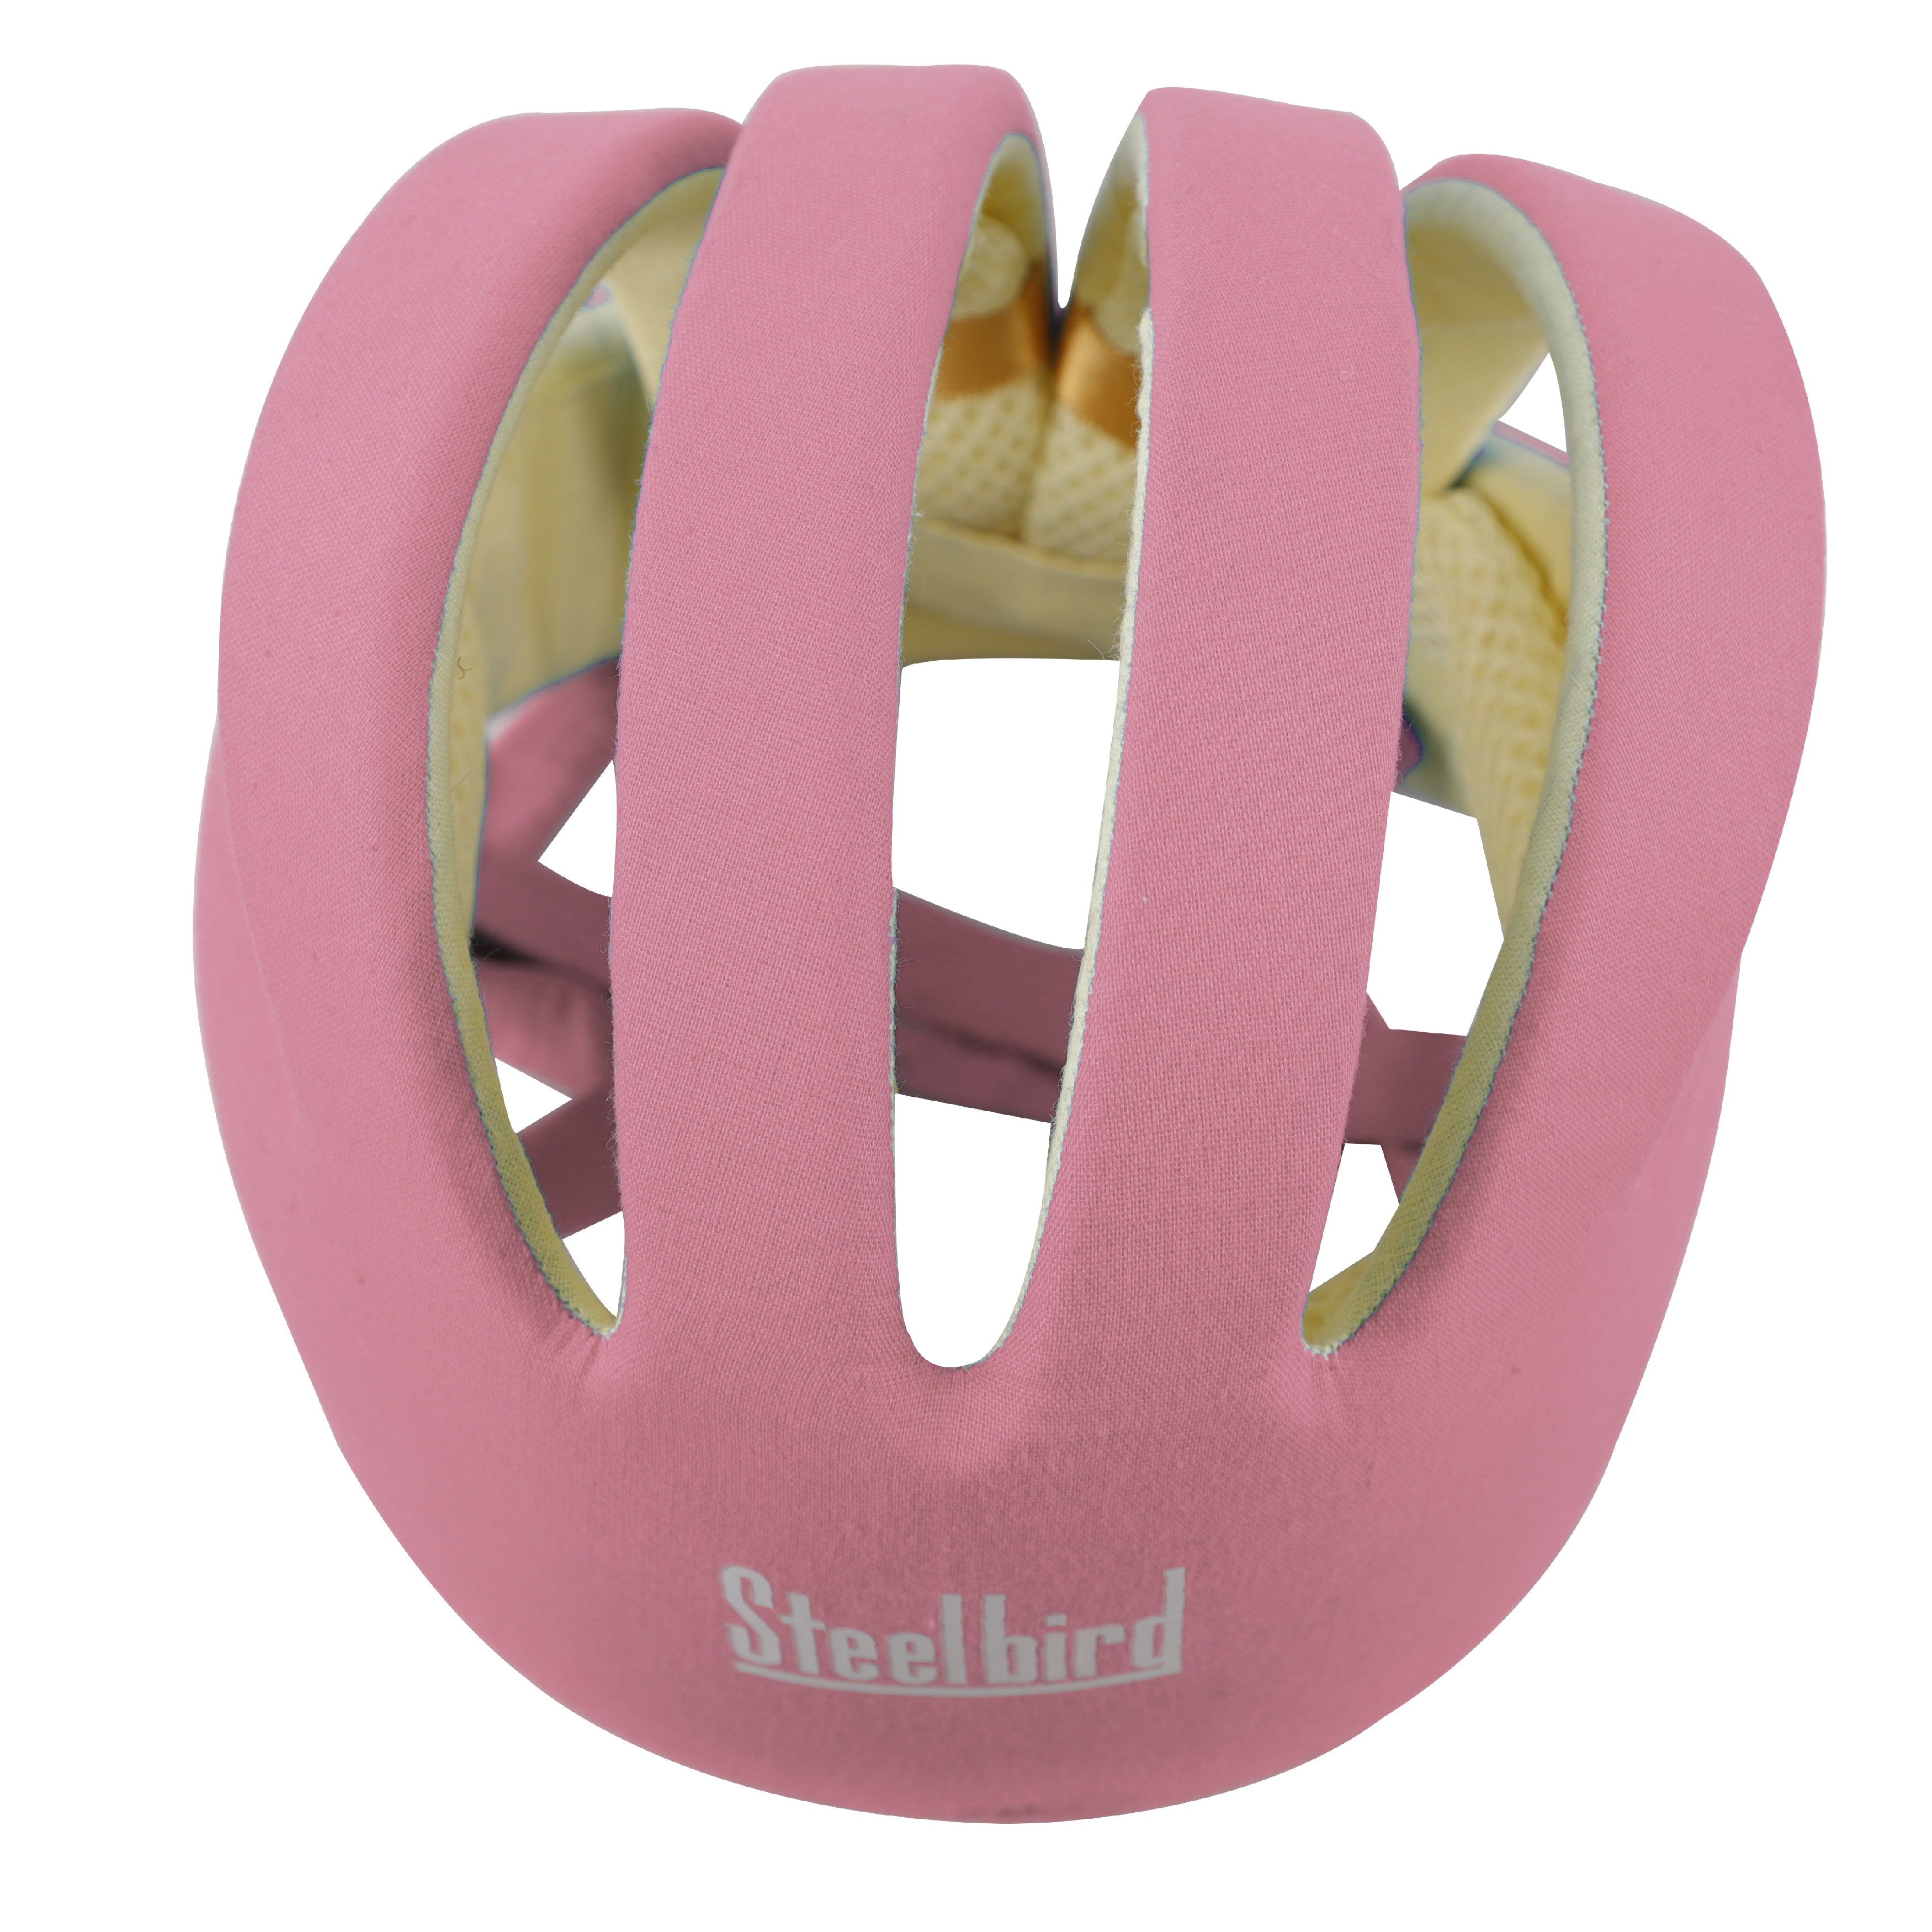 Steelbird Kids Safety Helmet, Toddler Safety Helmet Adjustable + Knee Guards For Kids | Protective Gear Set For Skateboard, Bike, Roller Skating, Cycling, Scooter. (Baby Pink)